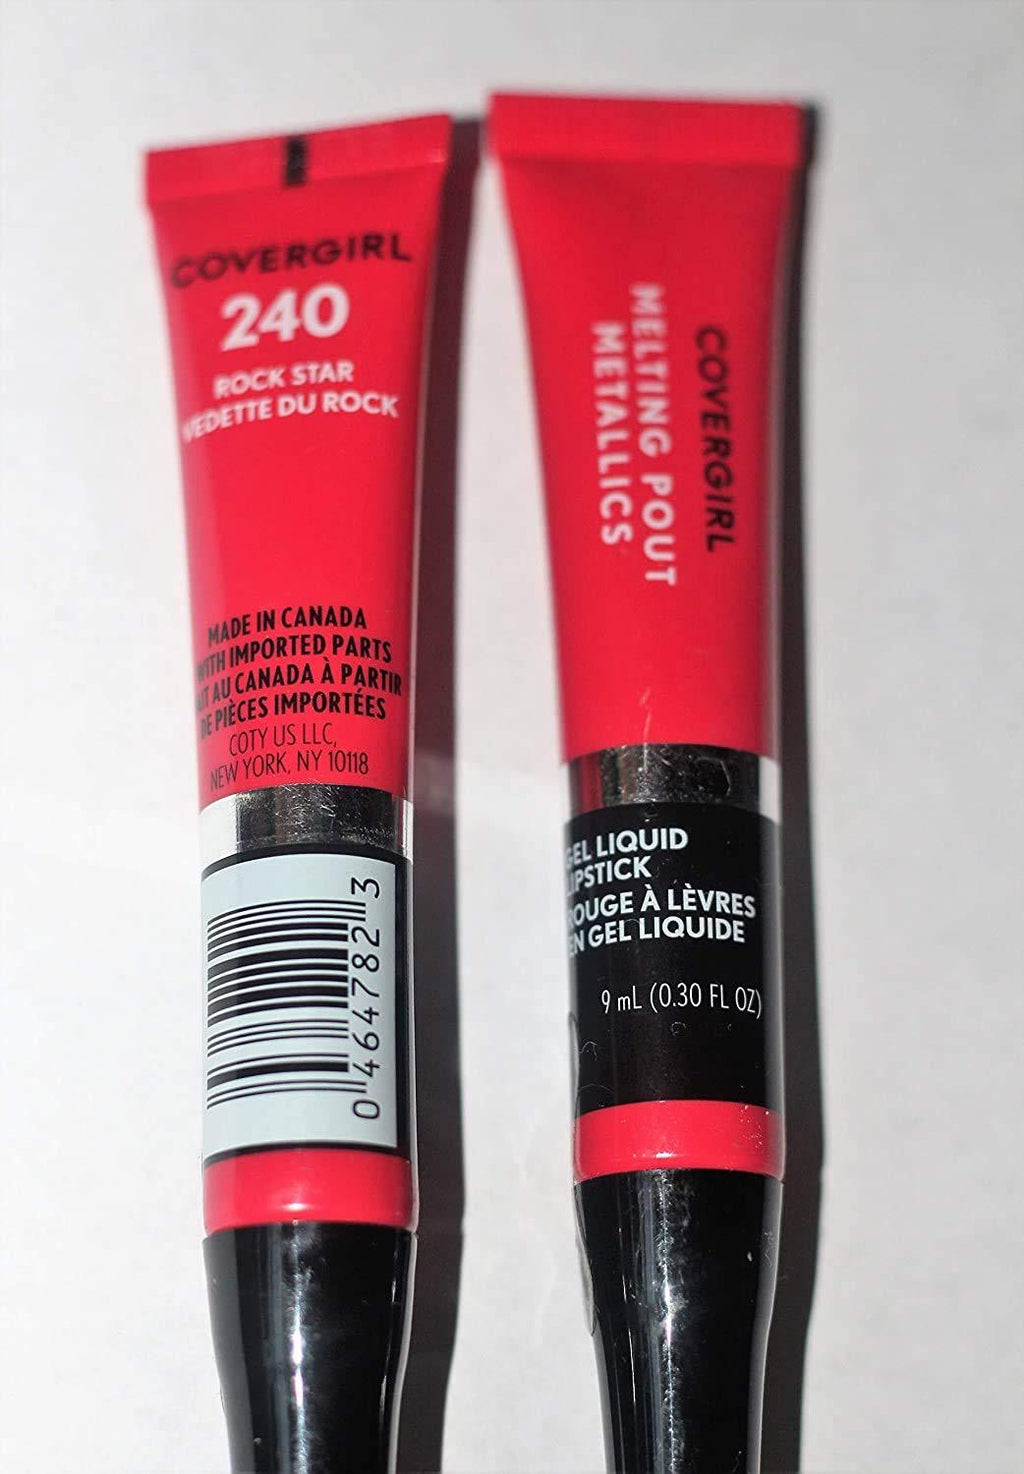 [Australia] - Pack of 2 CoverGirl Melting Pout Metallics Gel Liquid Lipstick, Rock Star 240 